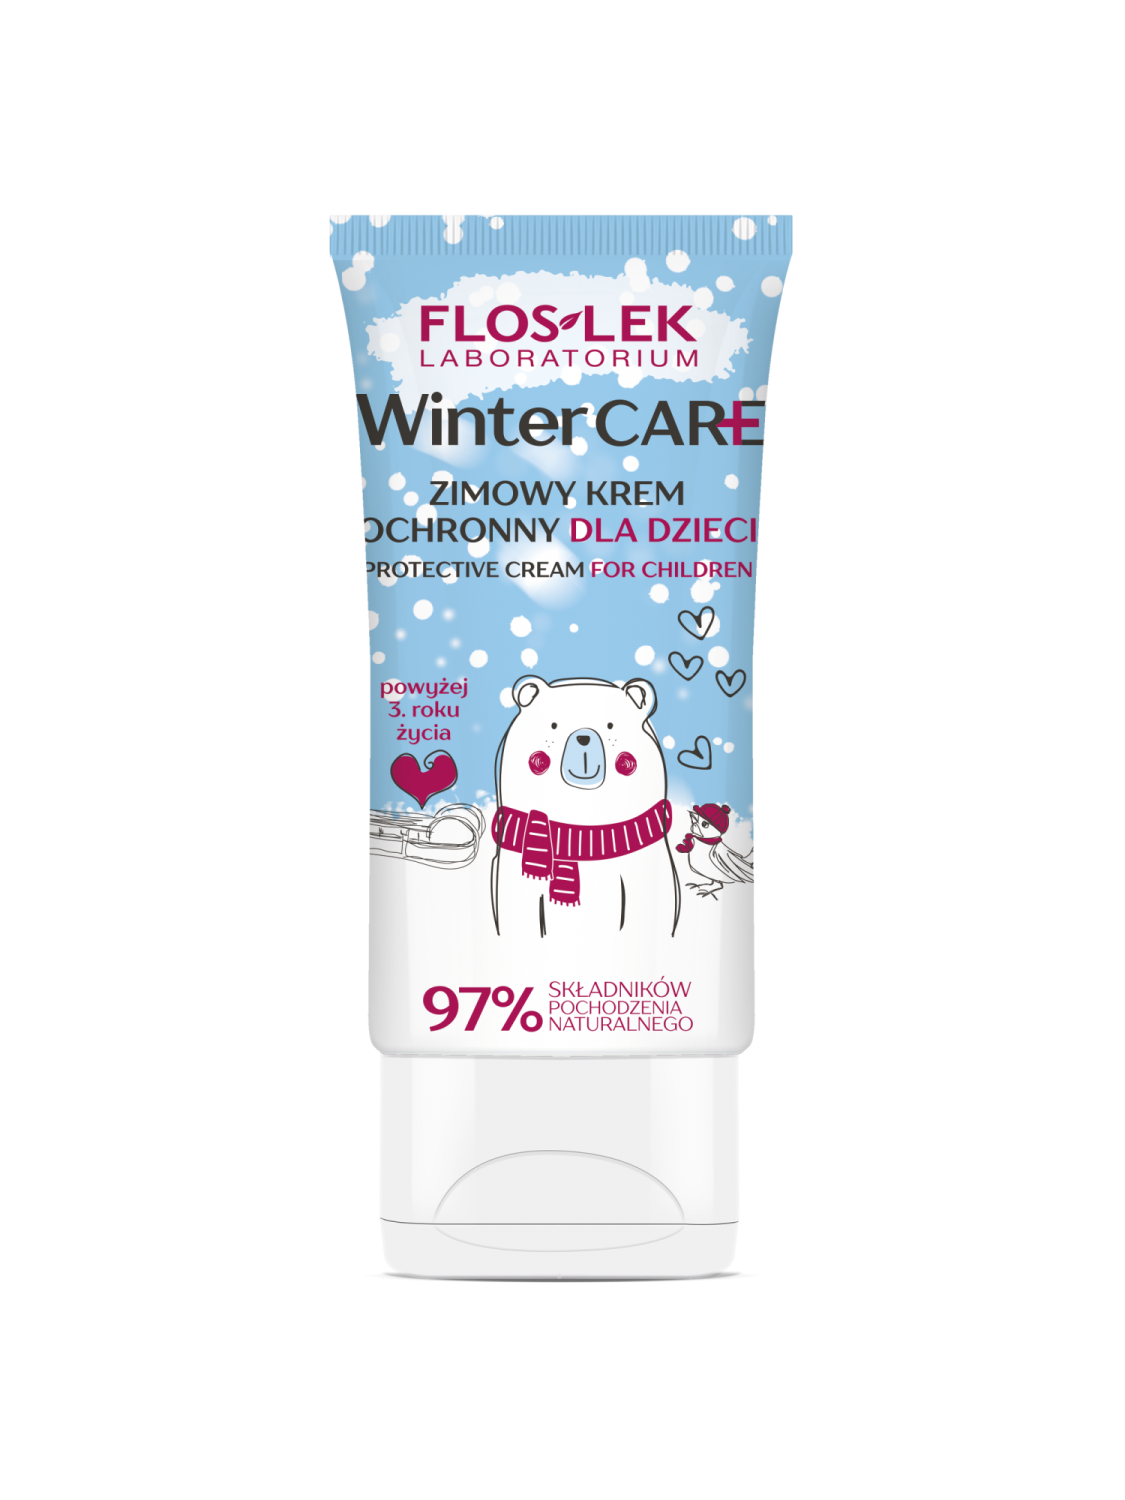 WINTER CARE  Winter protective cream for children - 50 ml - Floslek